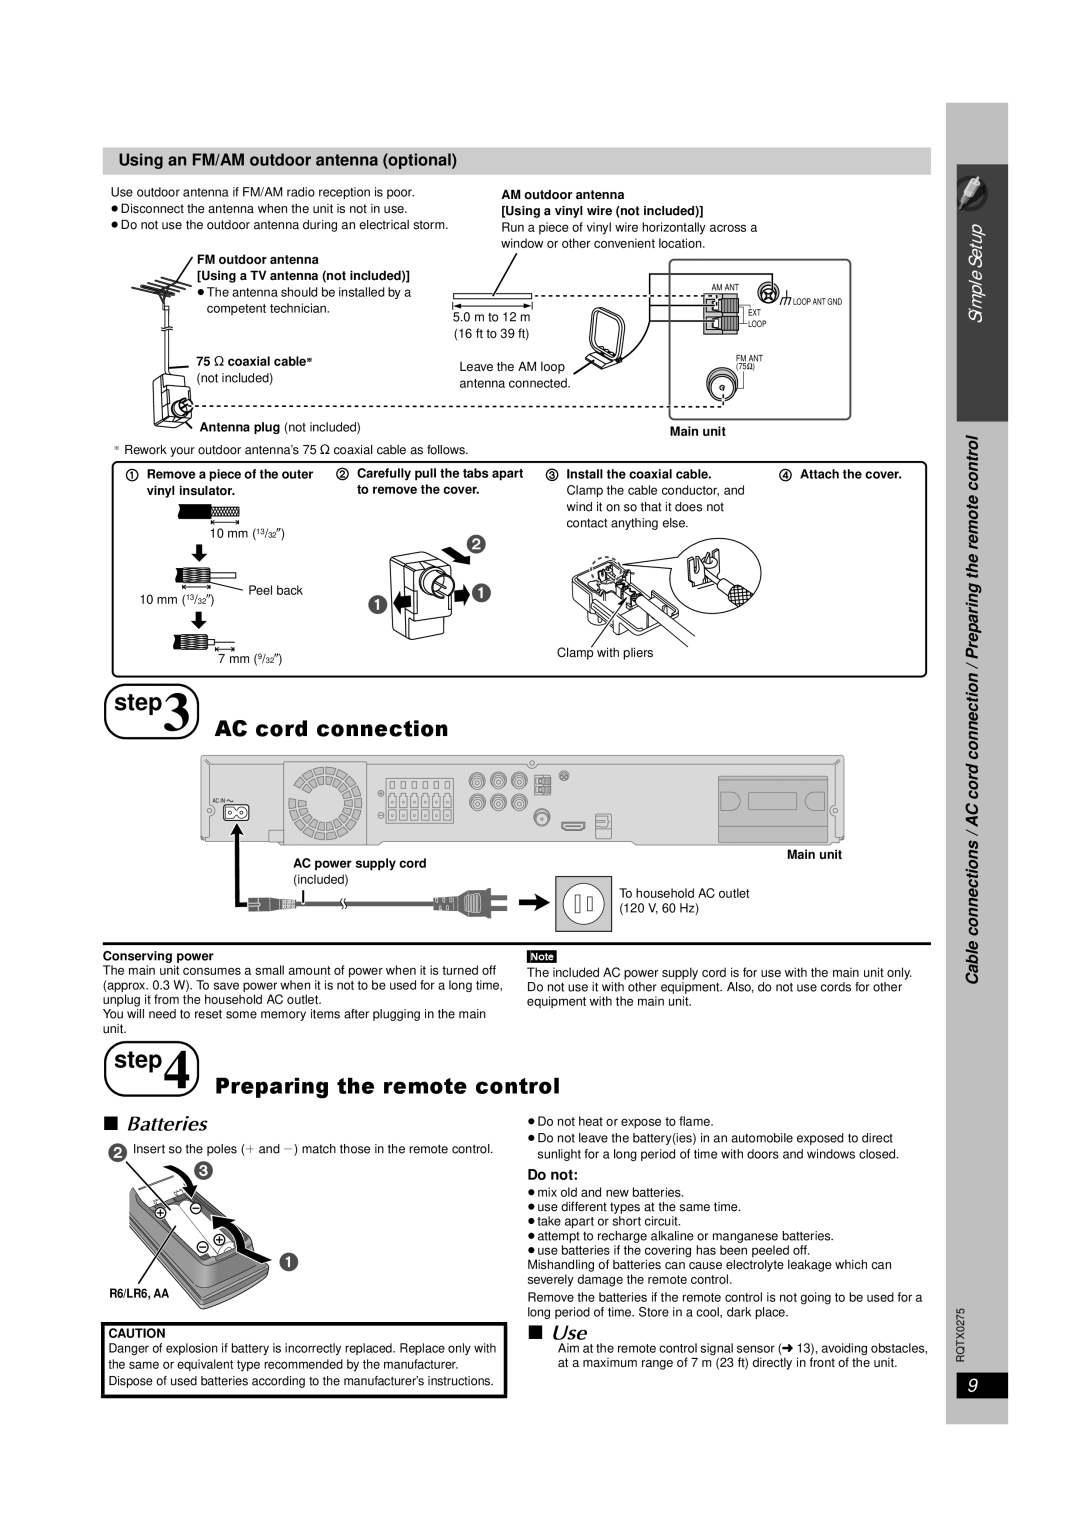 Panasonic SC-PT665 manual AC cord connection, Preparing the remote control, ∫Batteries, ∫ Use, Simple Setup 